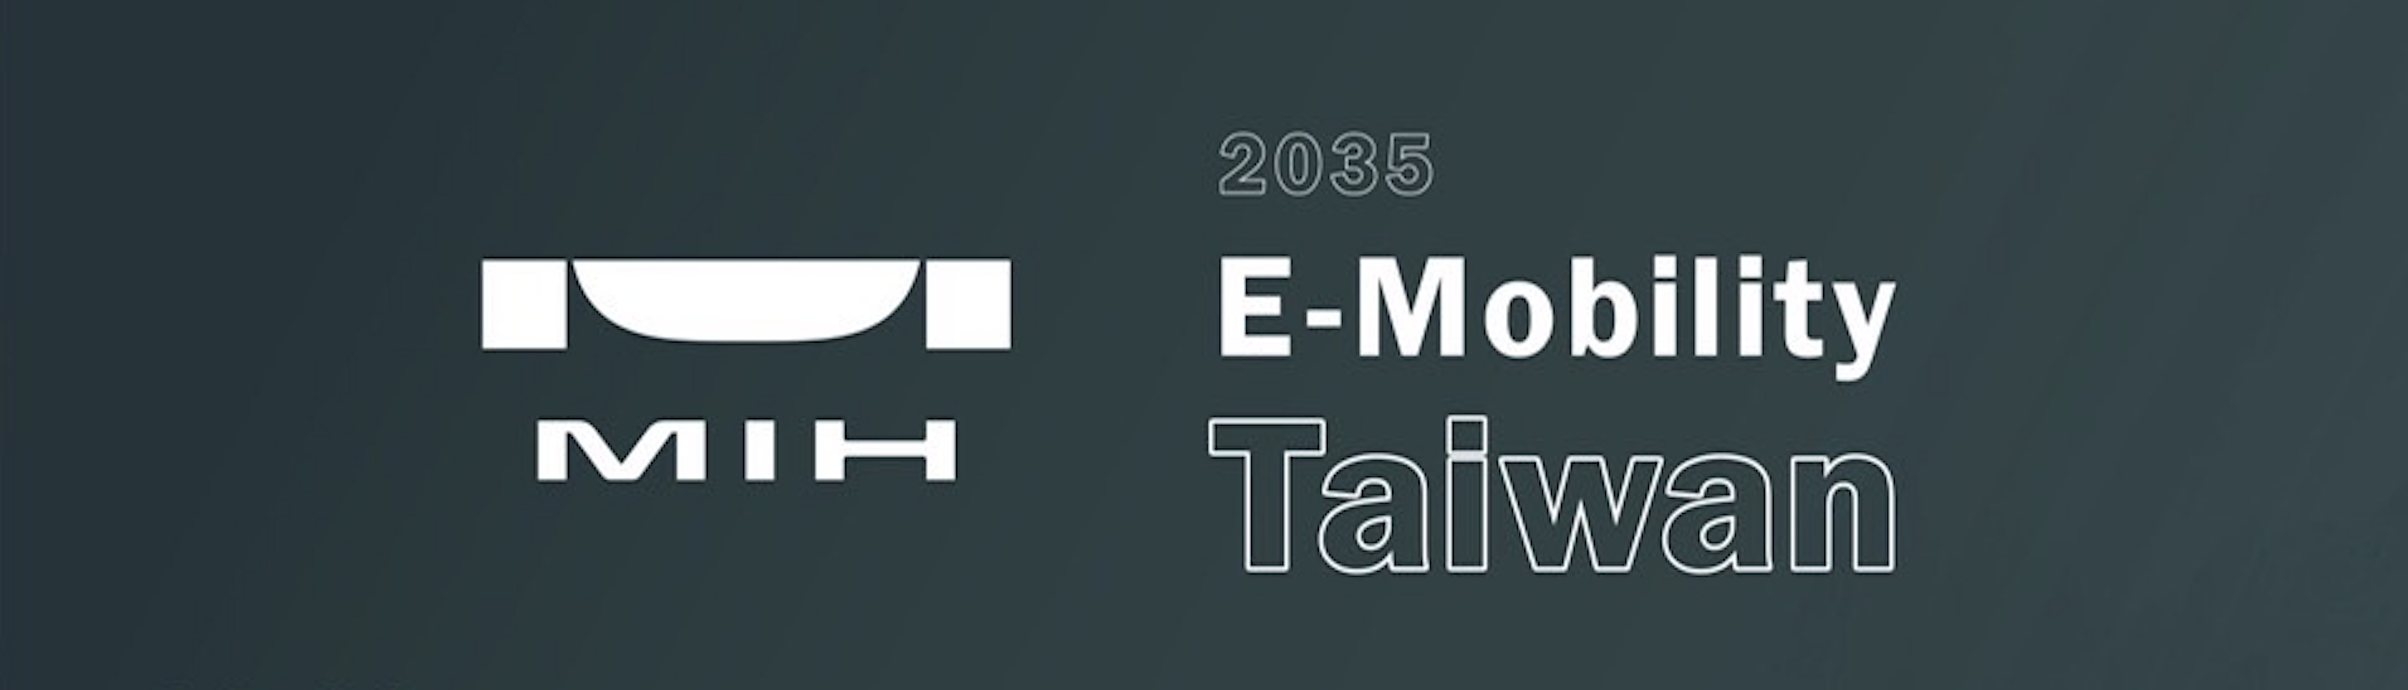 MIH 活動時間表 @ 2035 E-Mobility Taiwan